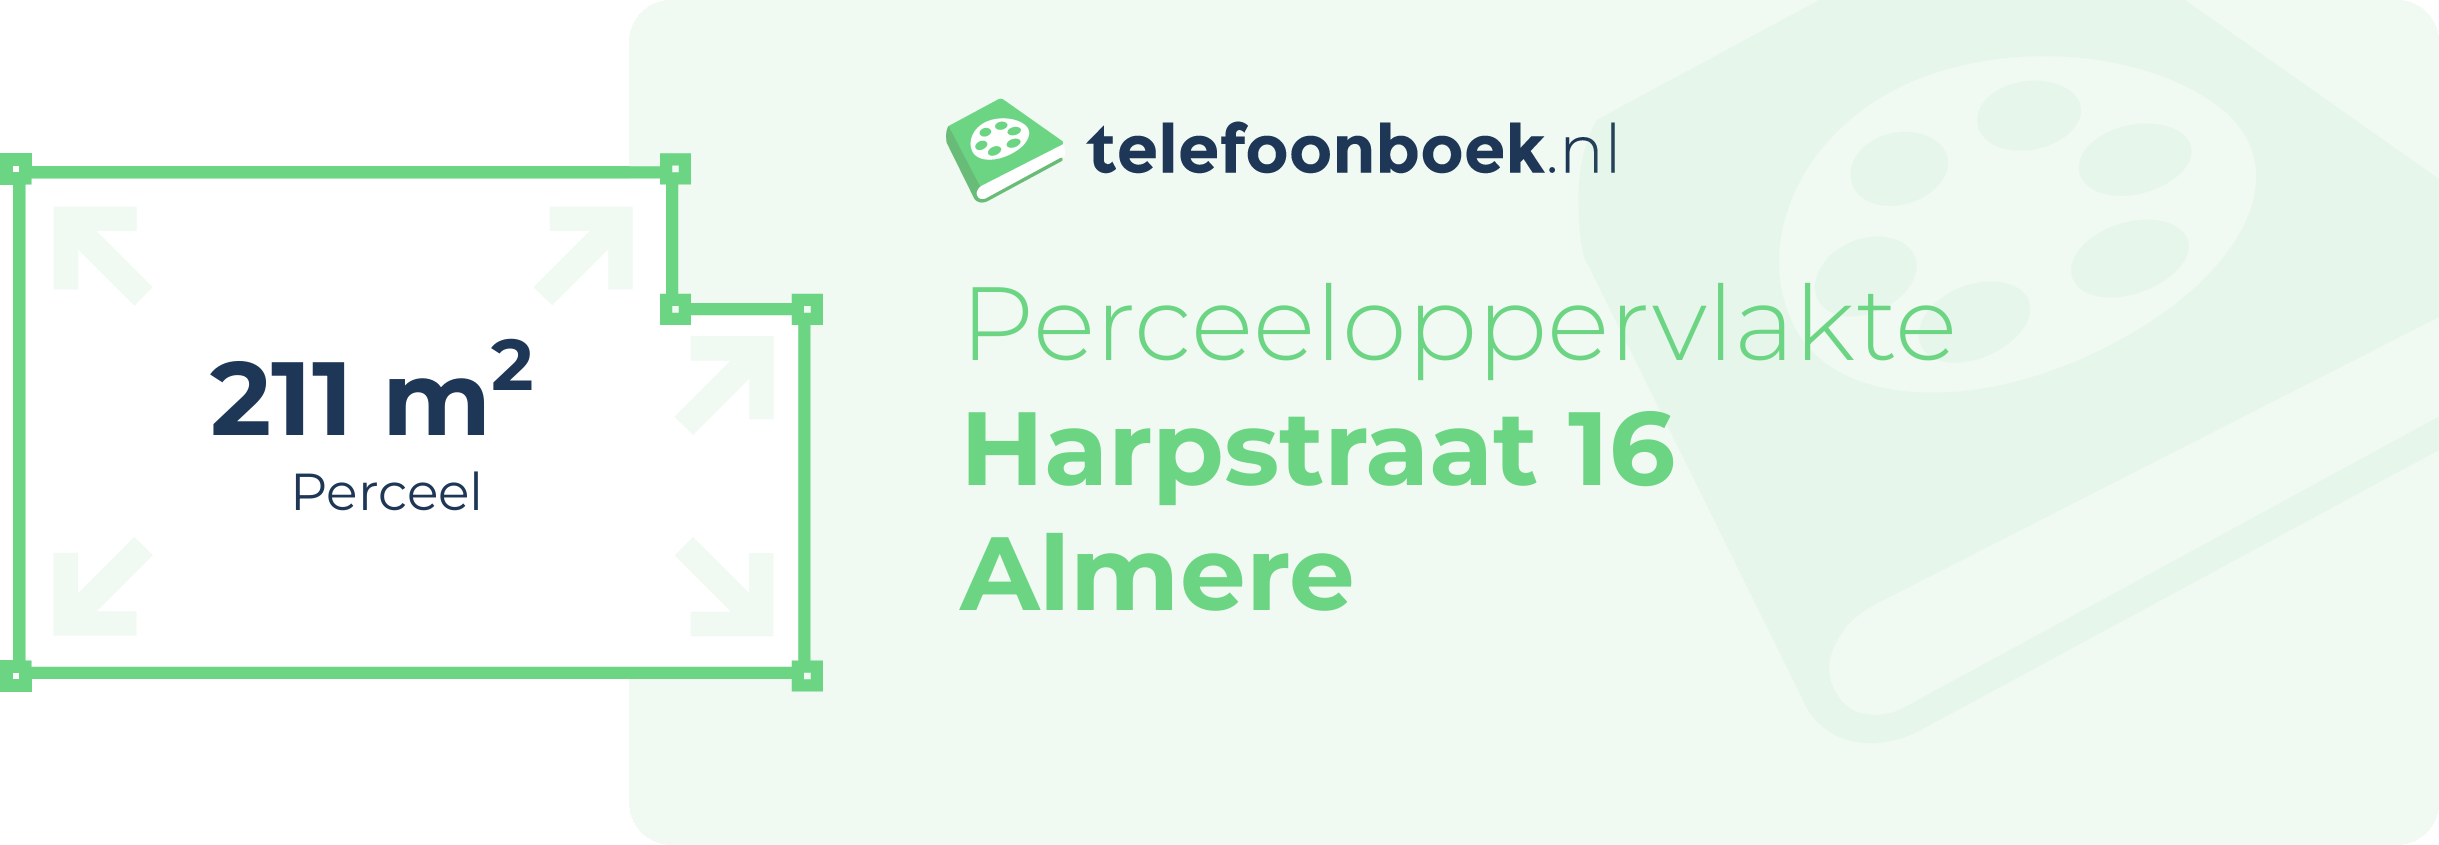 Perceeloppervlakte Harpstraat 16 Almere